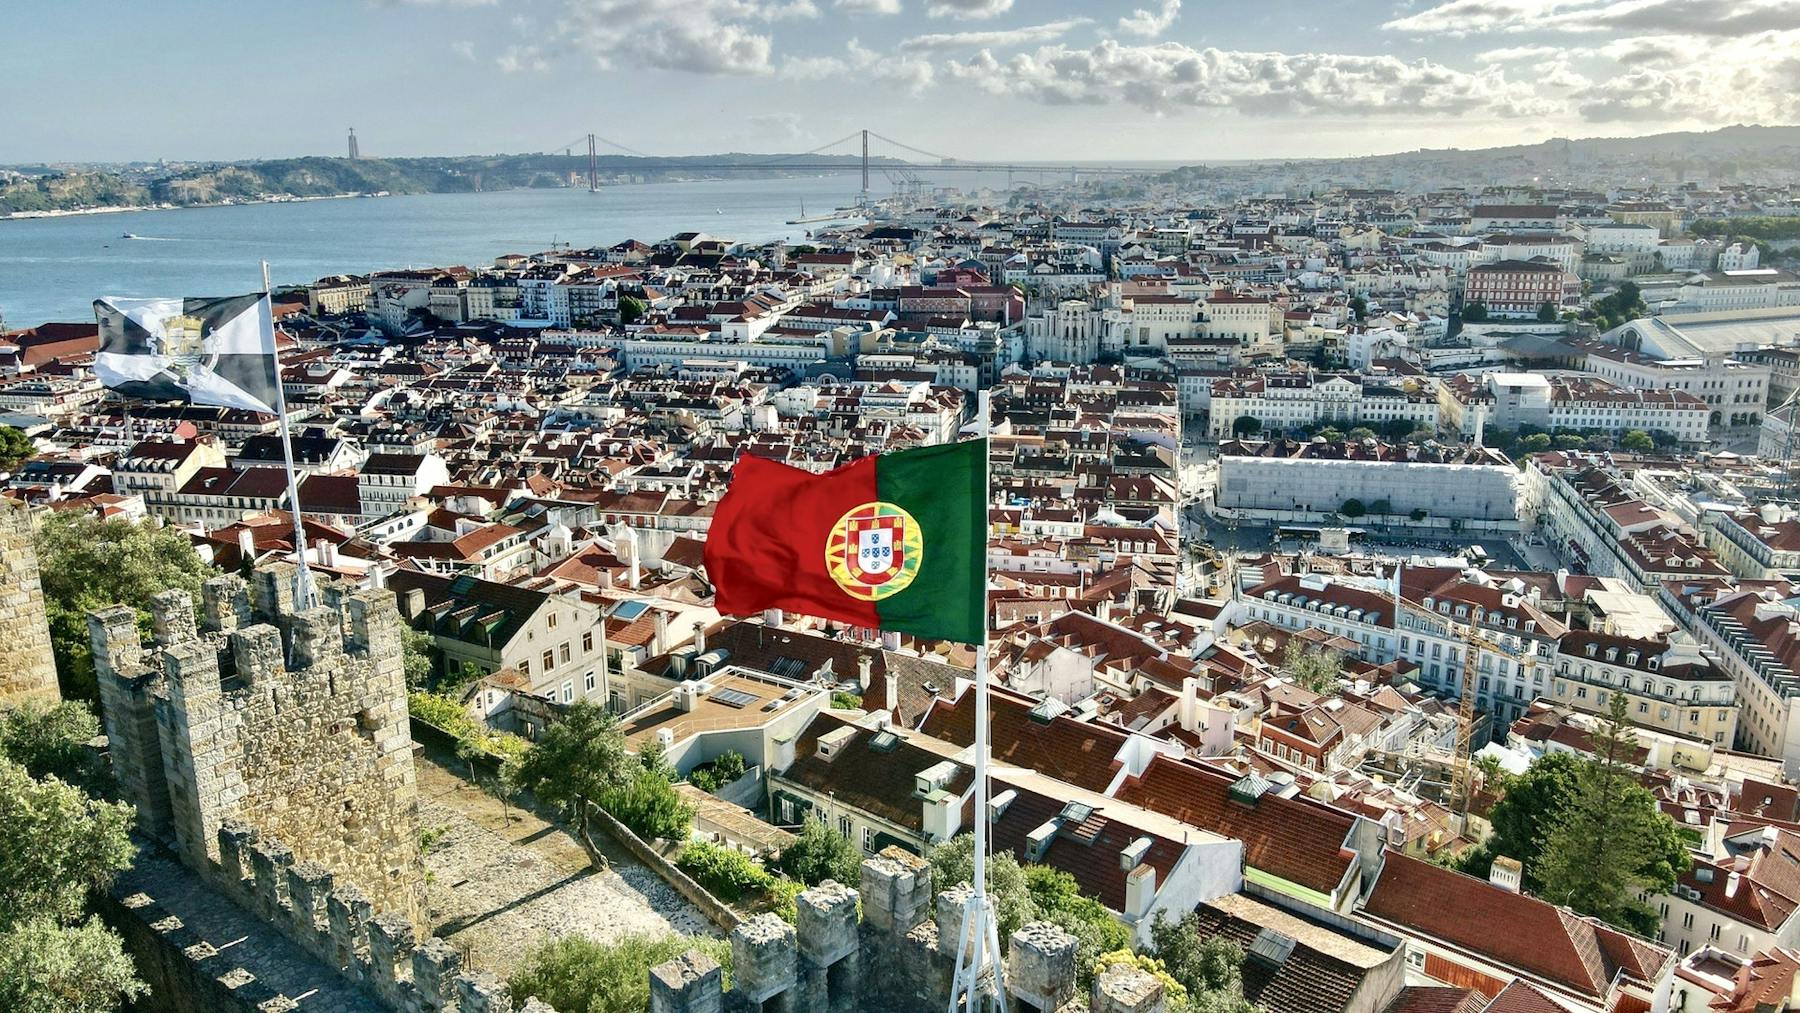 Bandeira de Portugal hasteada com a cidade de Lisboa ao fundo